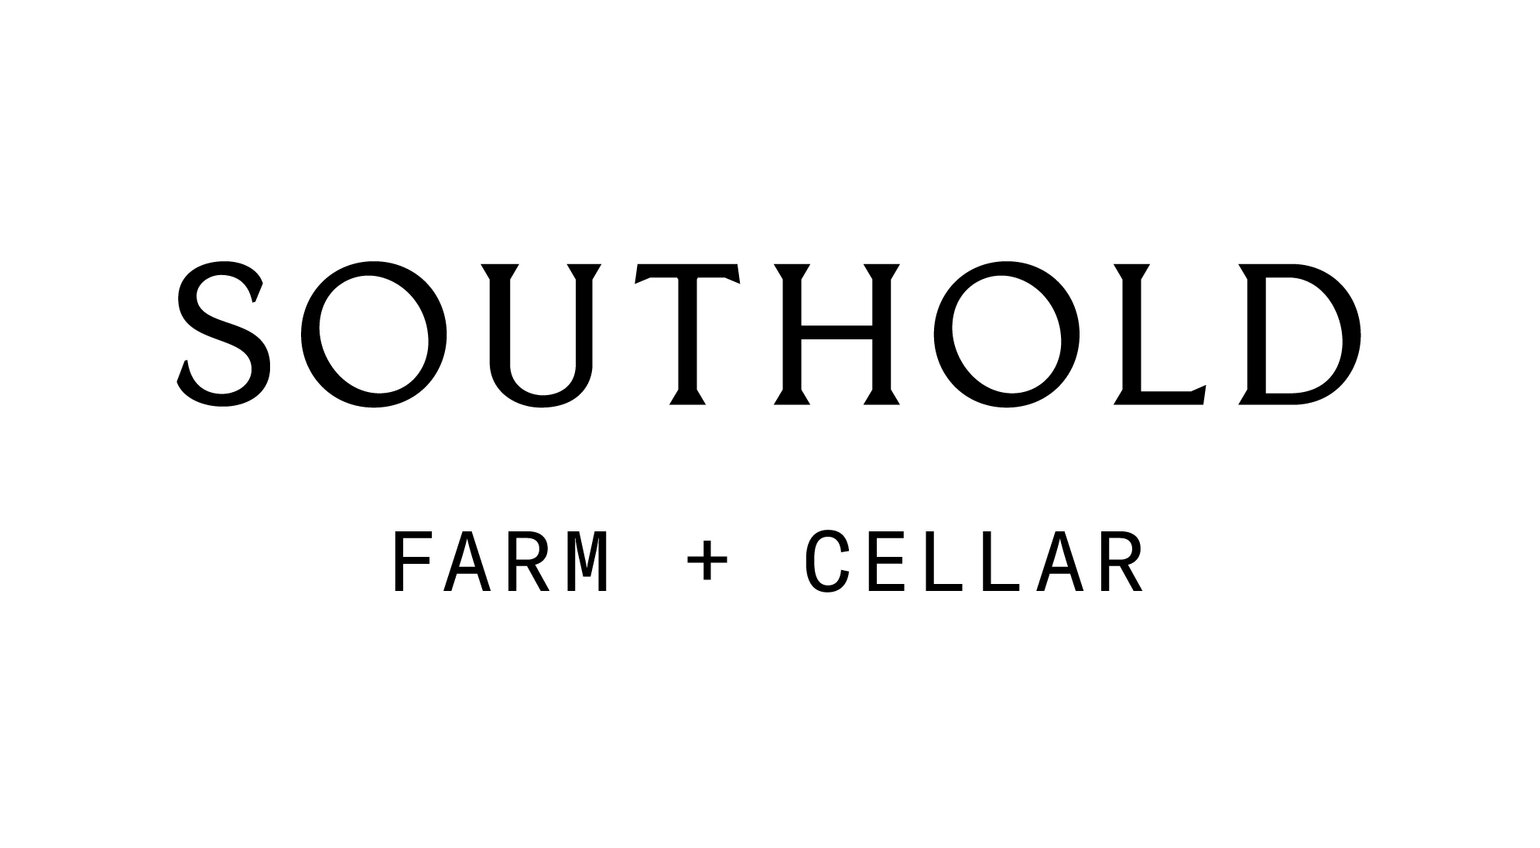 Southold Farm + Cellar